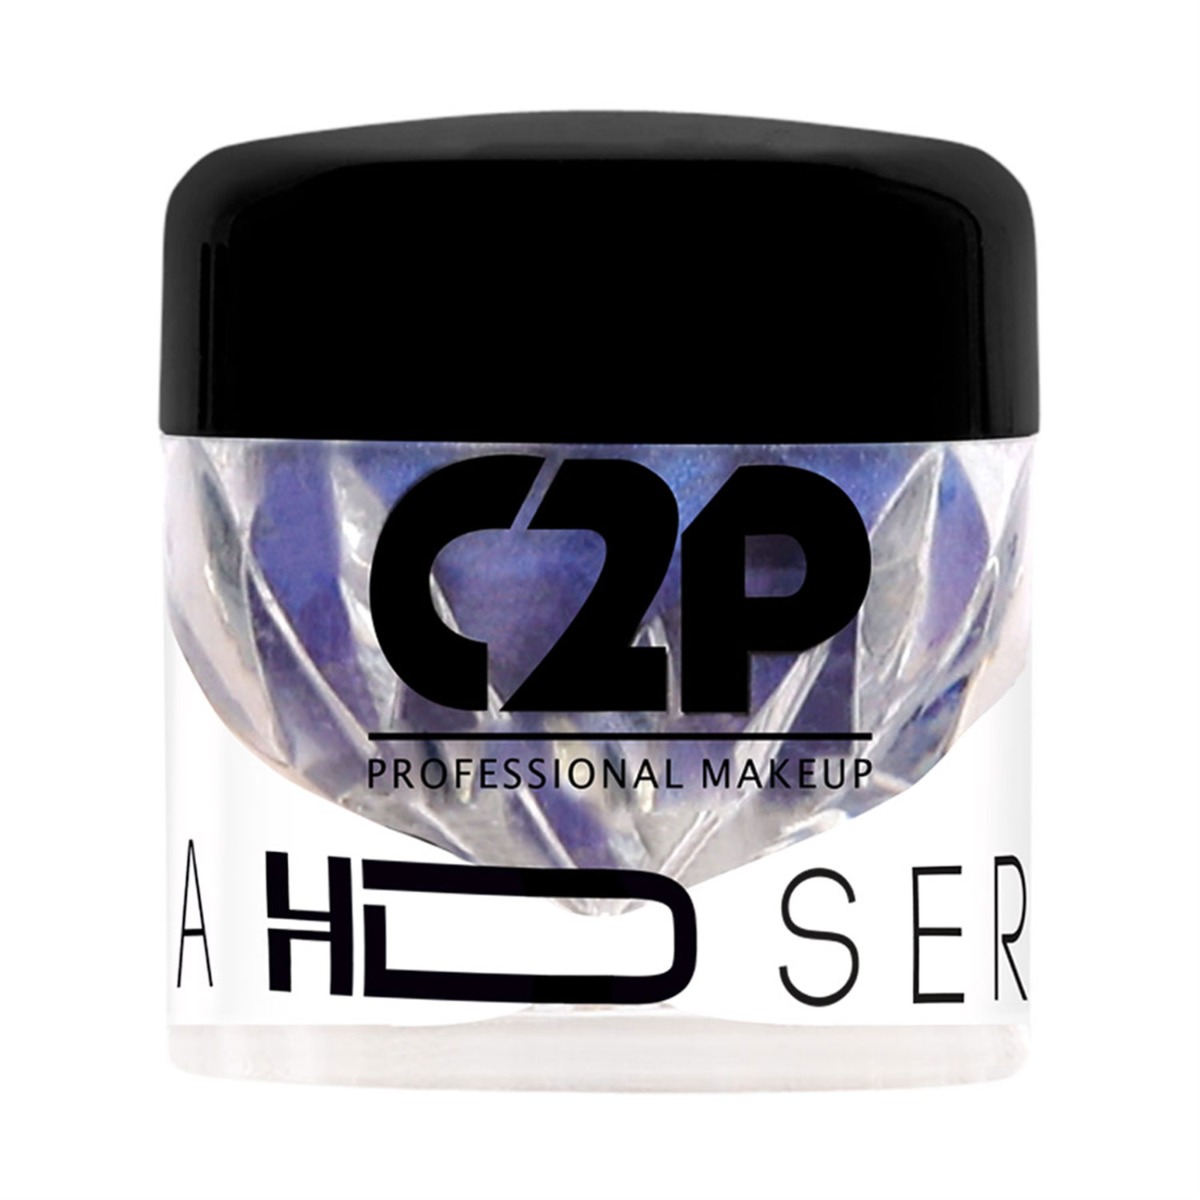 C2P Pro HD Loose Precious Pigments - Ceo 24, 2gm